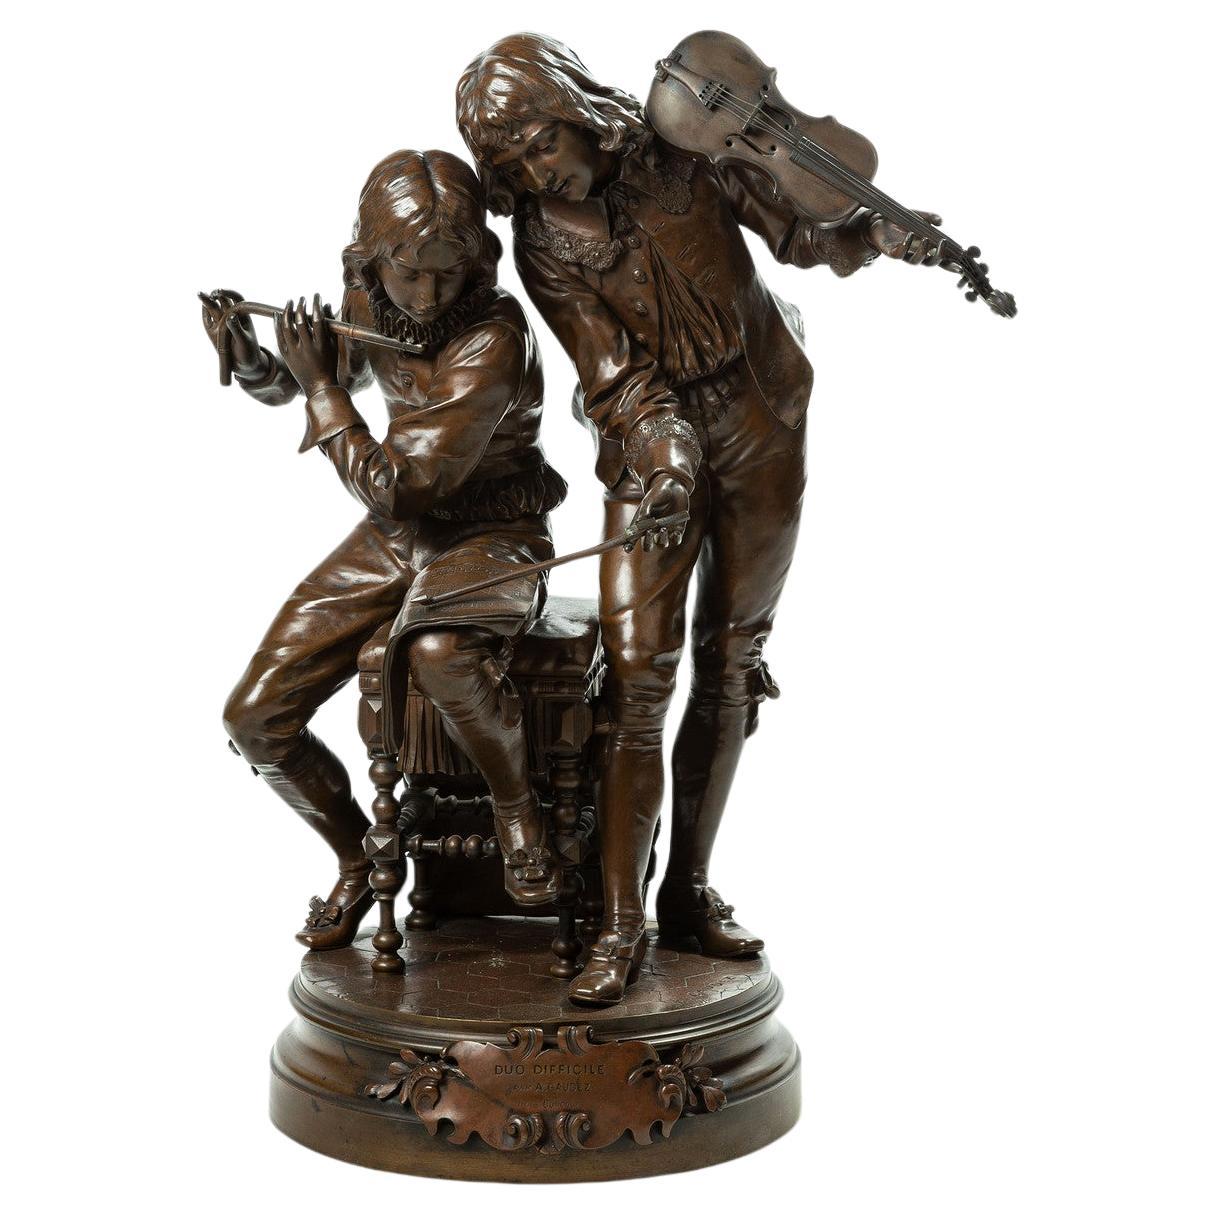 Patinated bronze figure group "Duo Difficile" by Adrien-Etienne Gaudez  For Sale